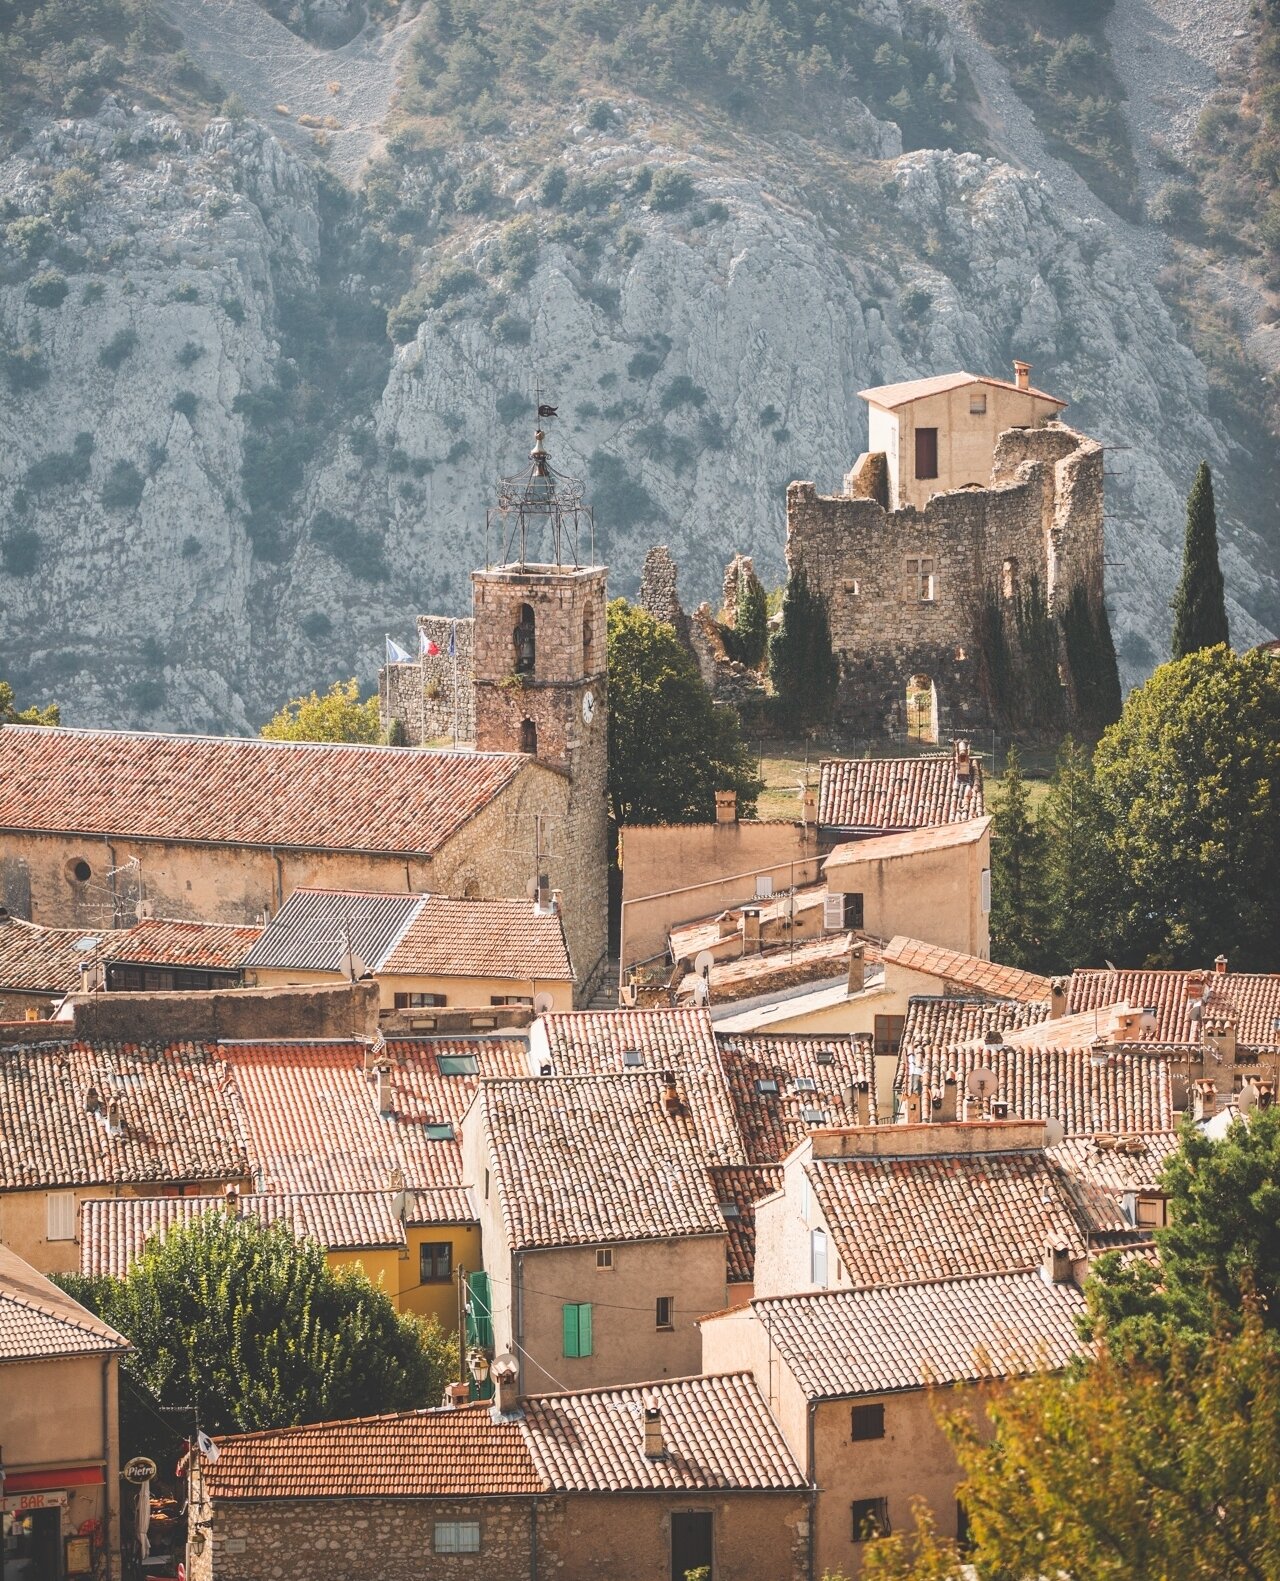 ➖ À LA PROVENÇALE ➖

This shot depicting Provençal architecture in all its splendor was taken in Gréolières, not far from the P-FR-10 course. 

We are